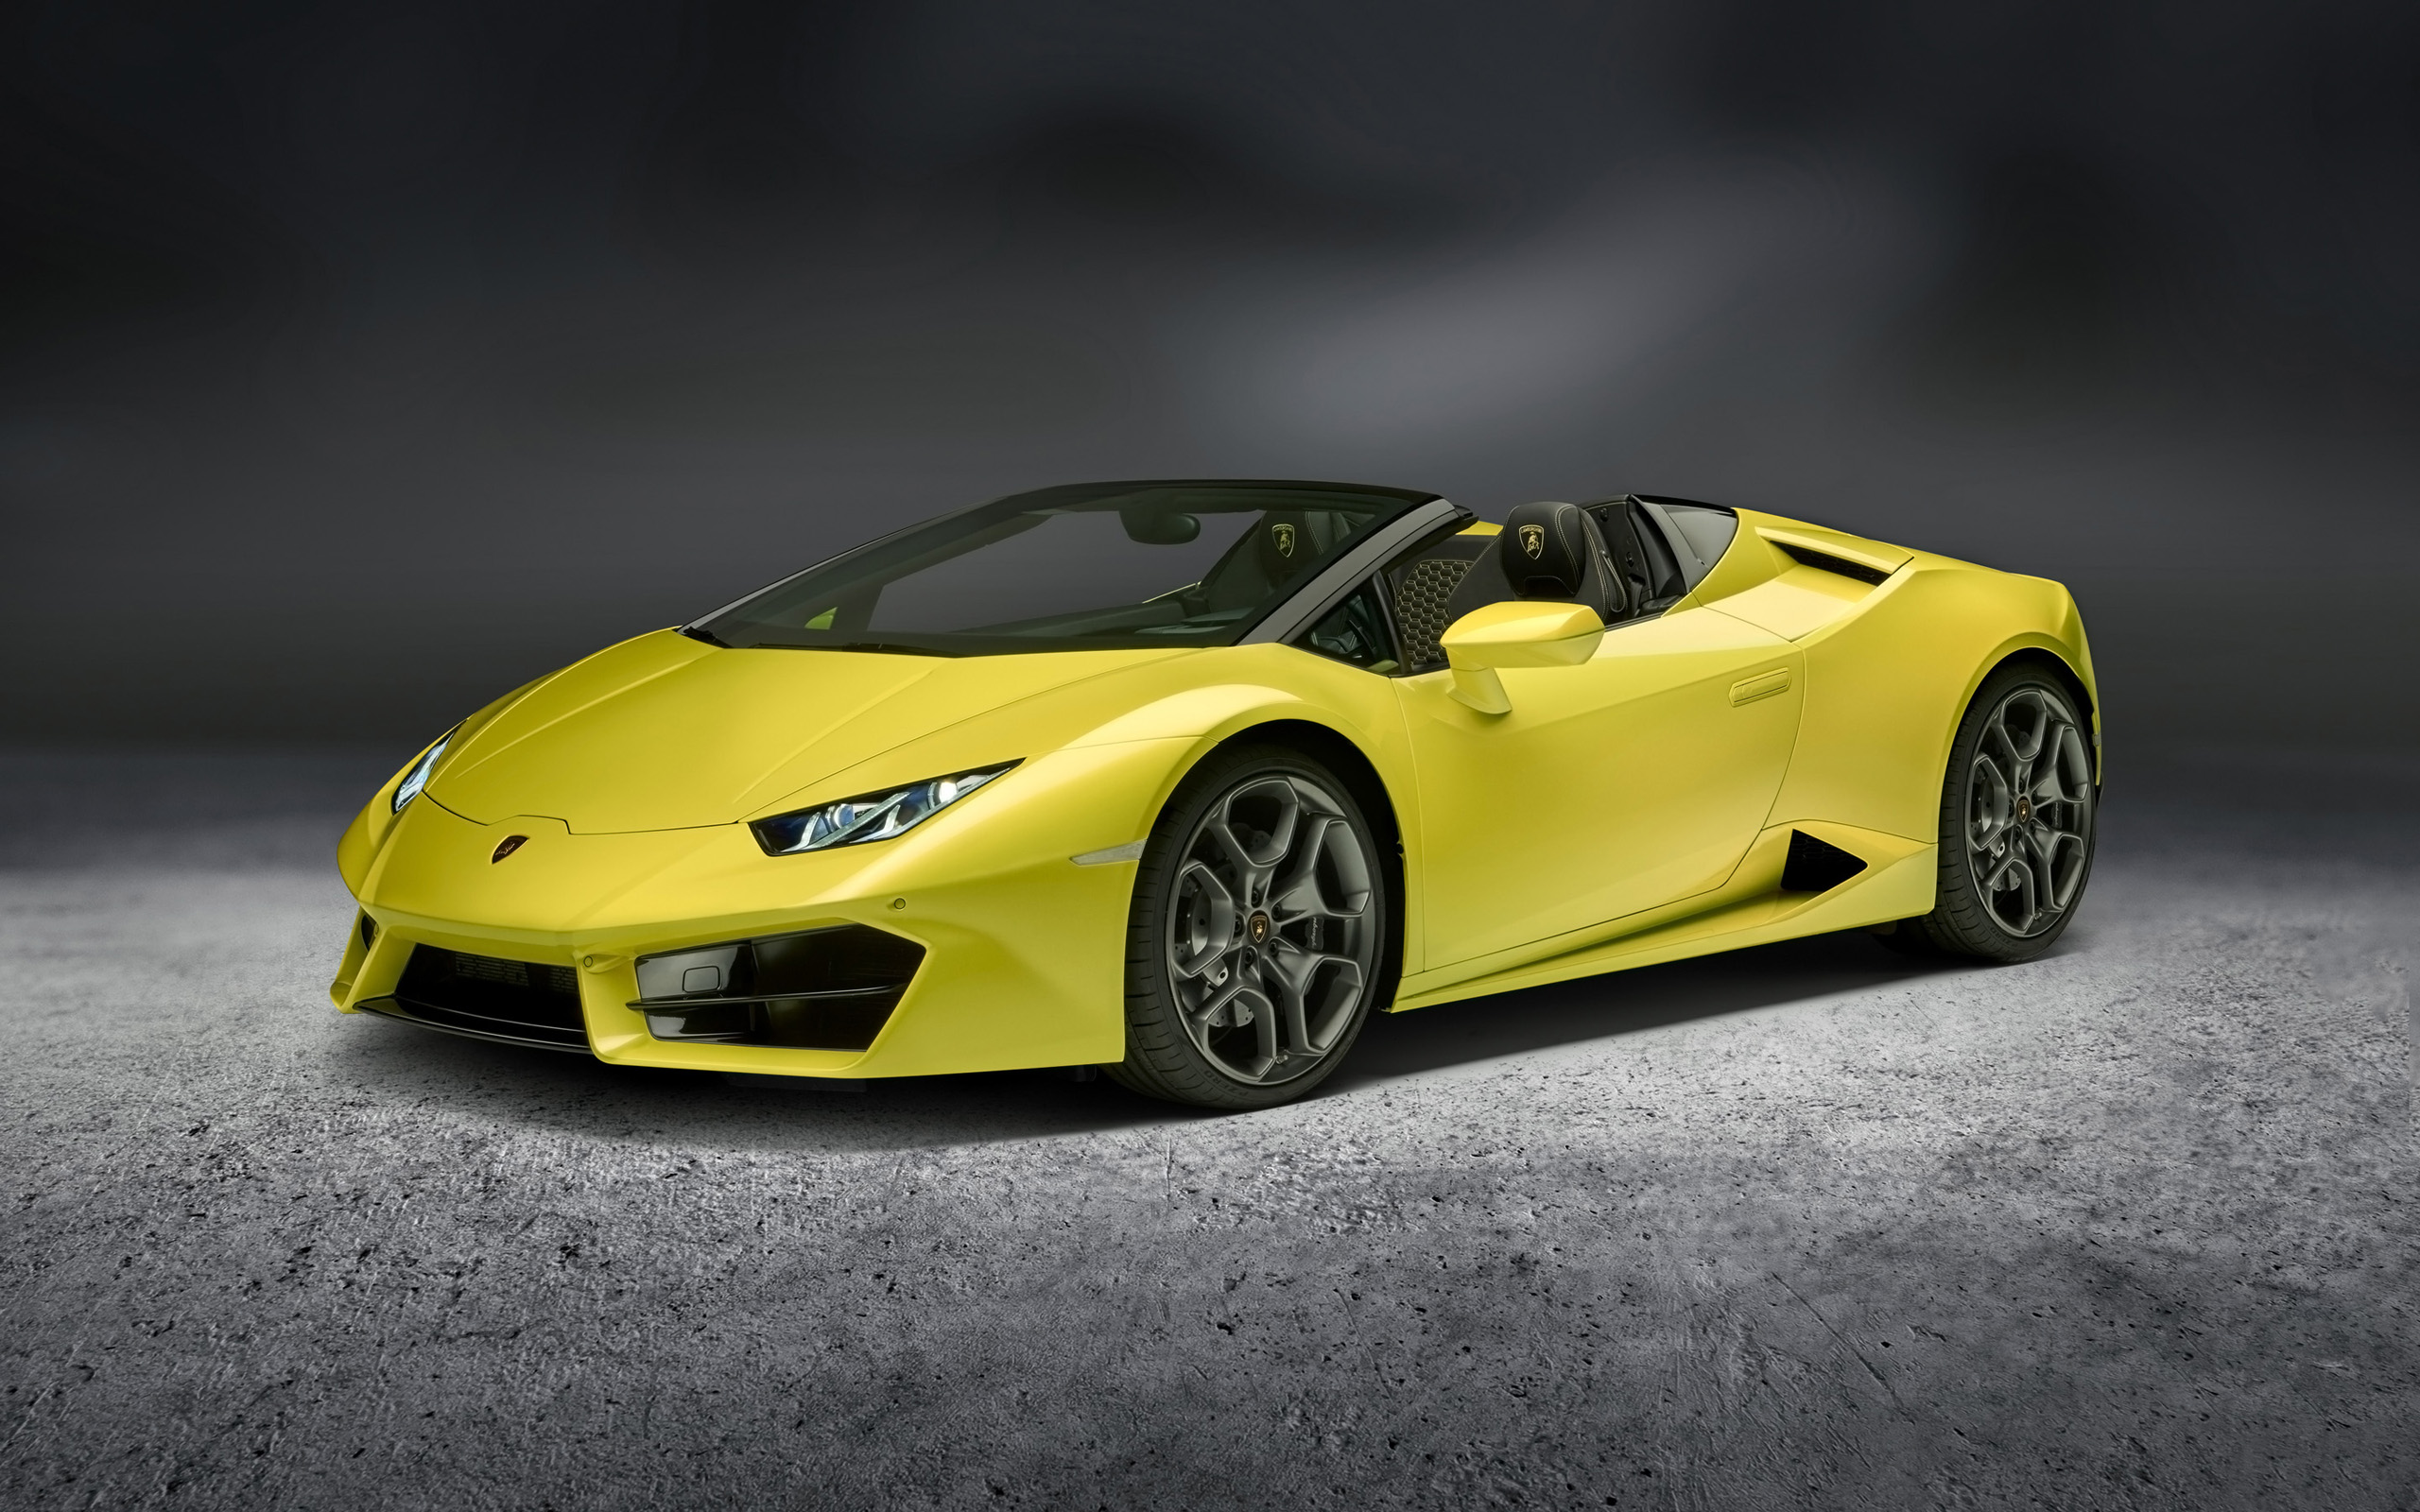 Télécharger des fonds d'écran Lamborghini Huracán Rwd Spyder HD